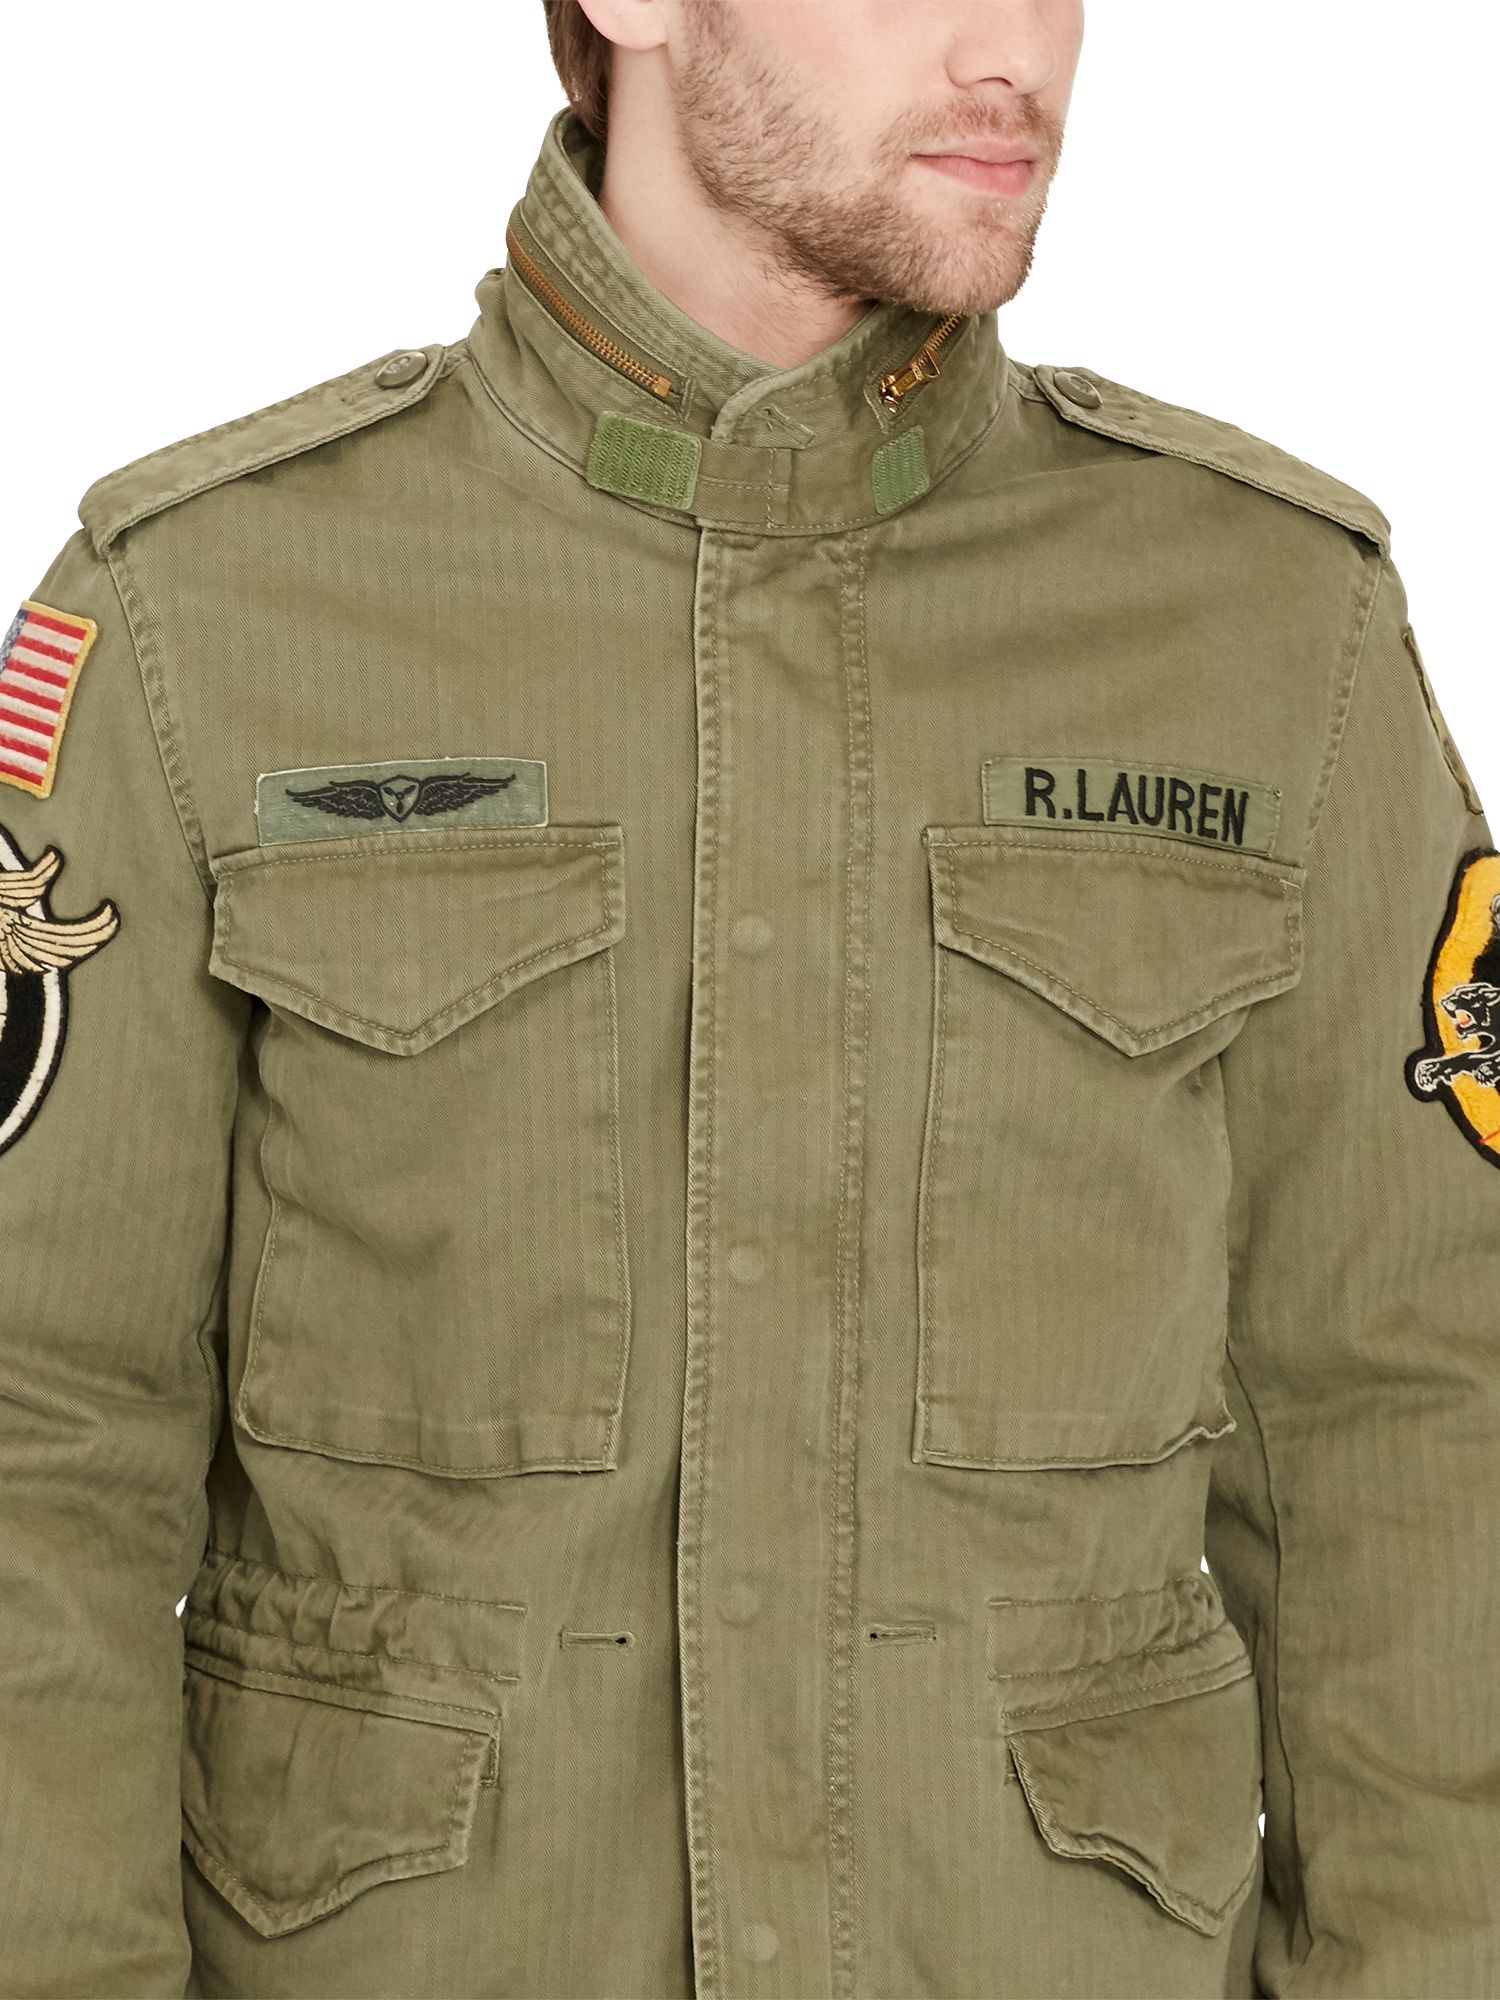 denim & supply military jacket